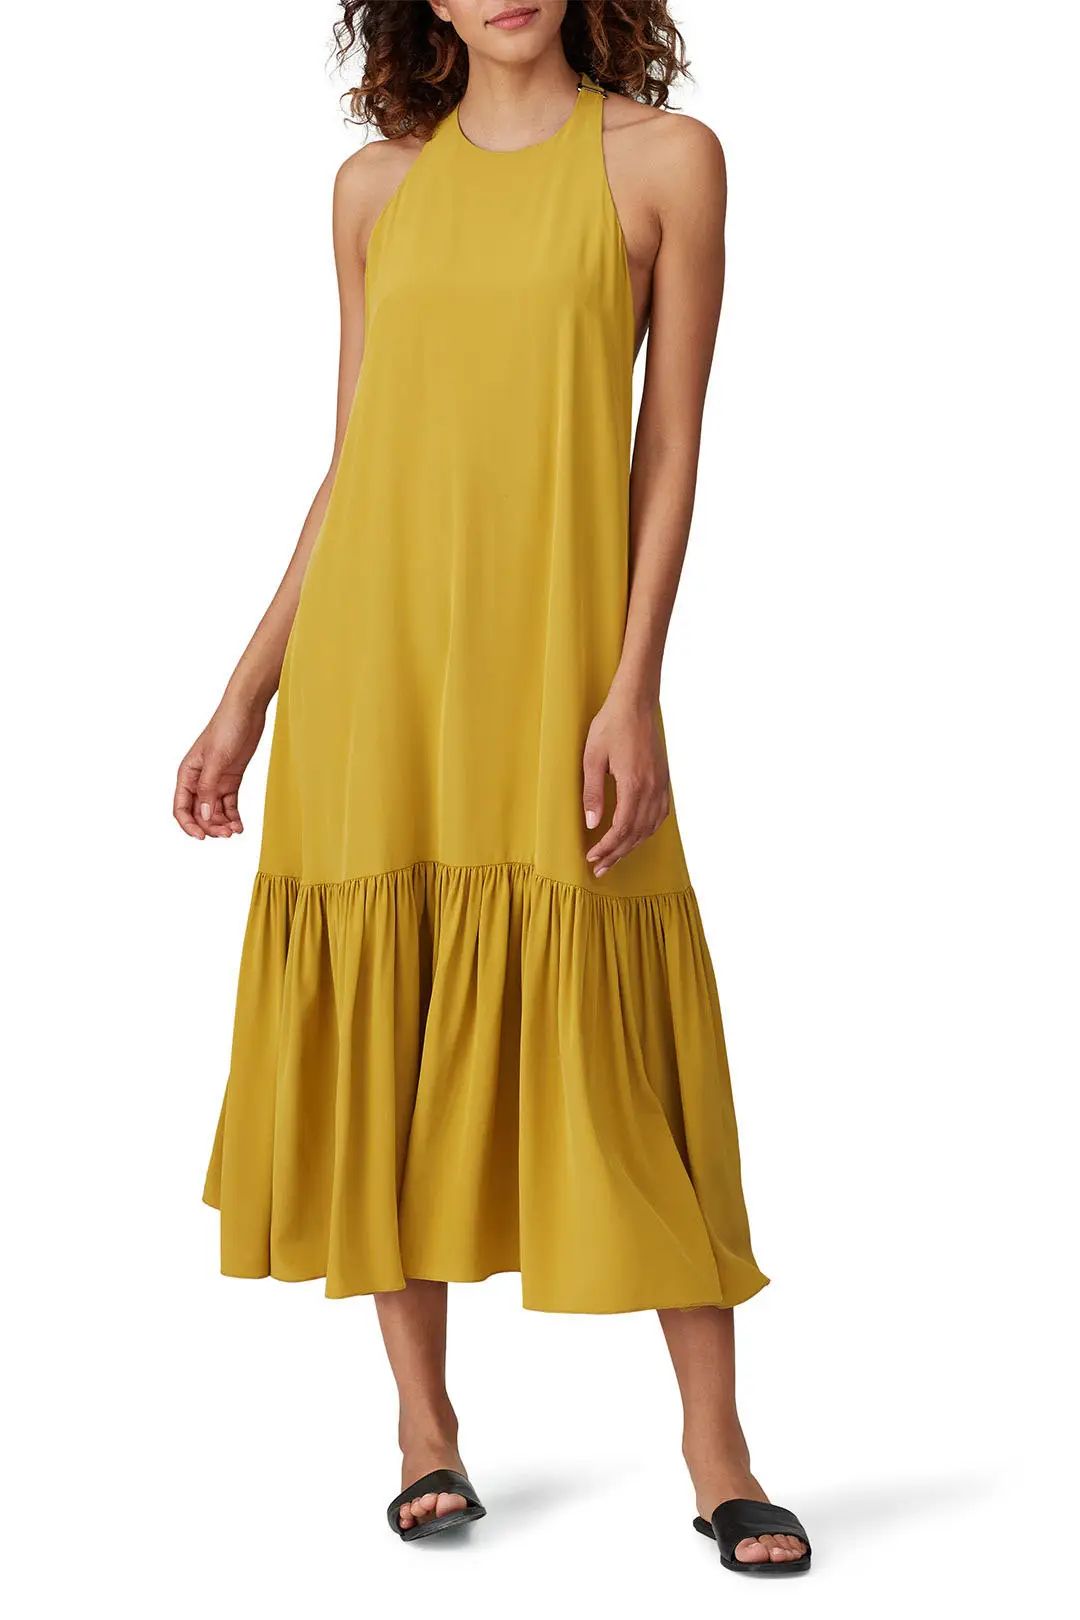 Tibi Eco Silk Halter Dress | Rent The Runway